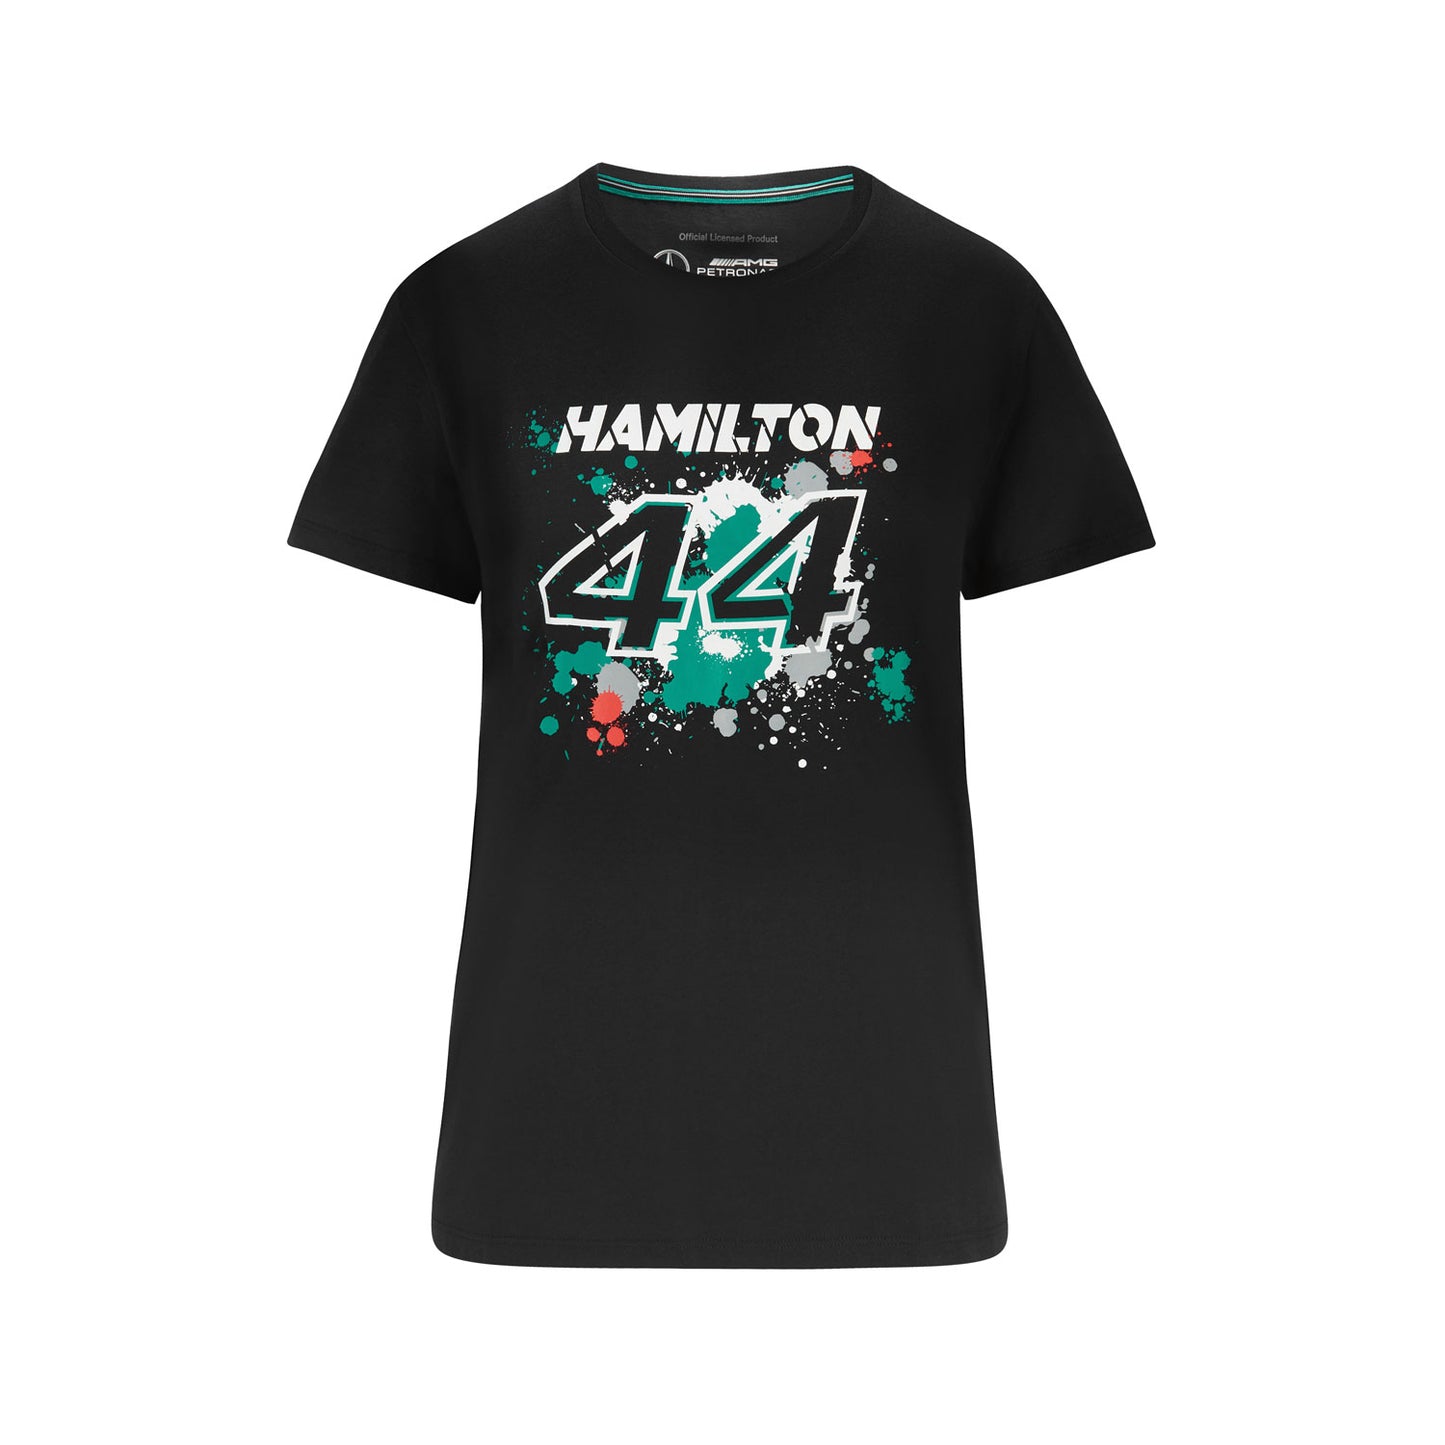 2022 Lewis 44 Mercedes AMG F1 ladies t-shirt